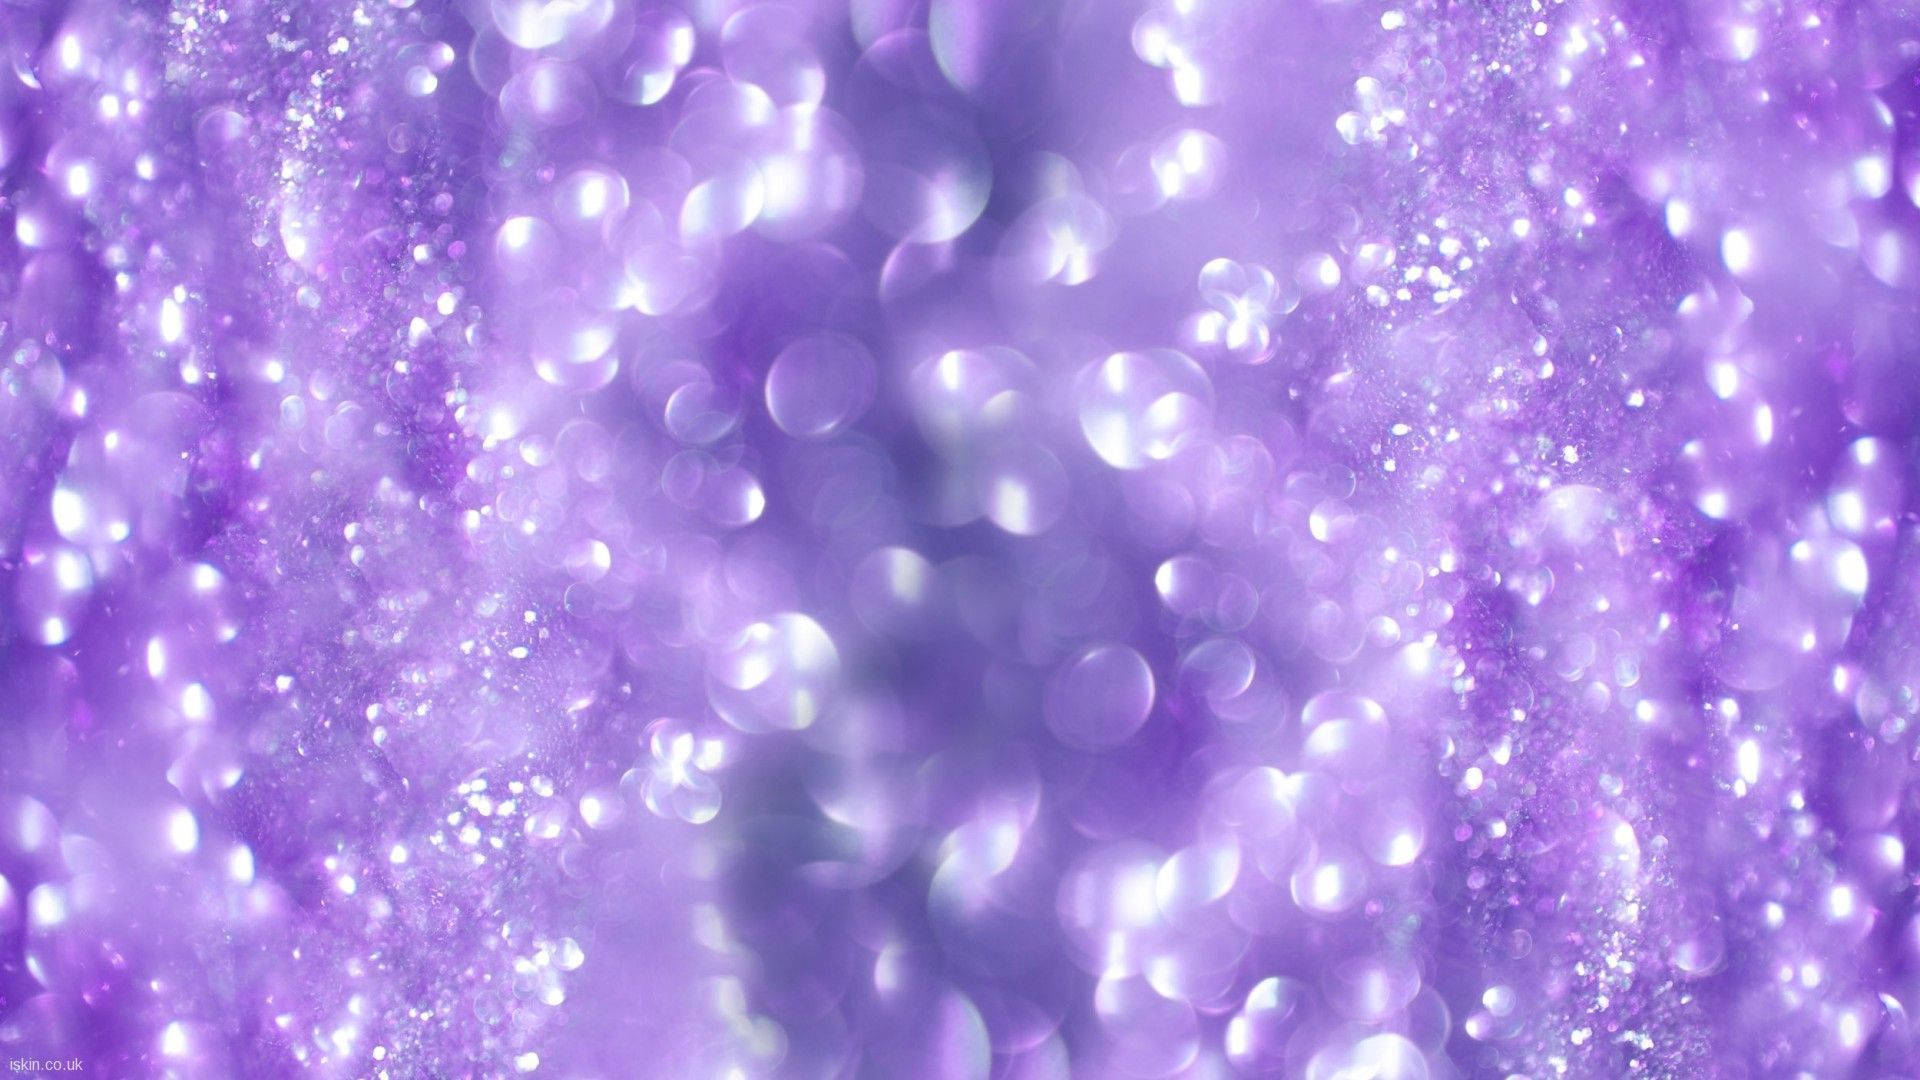 Autofocus Sparkly Purple Glitter Wallpaper